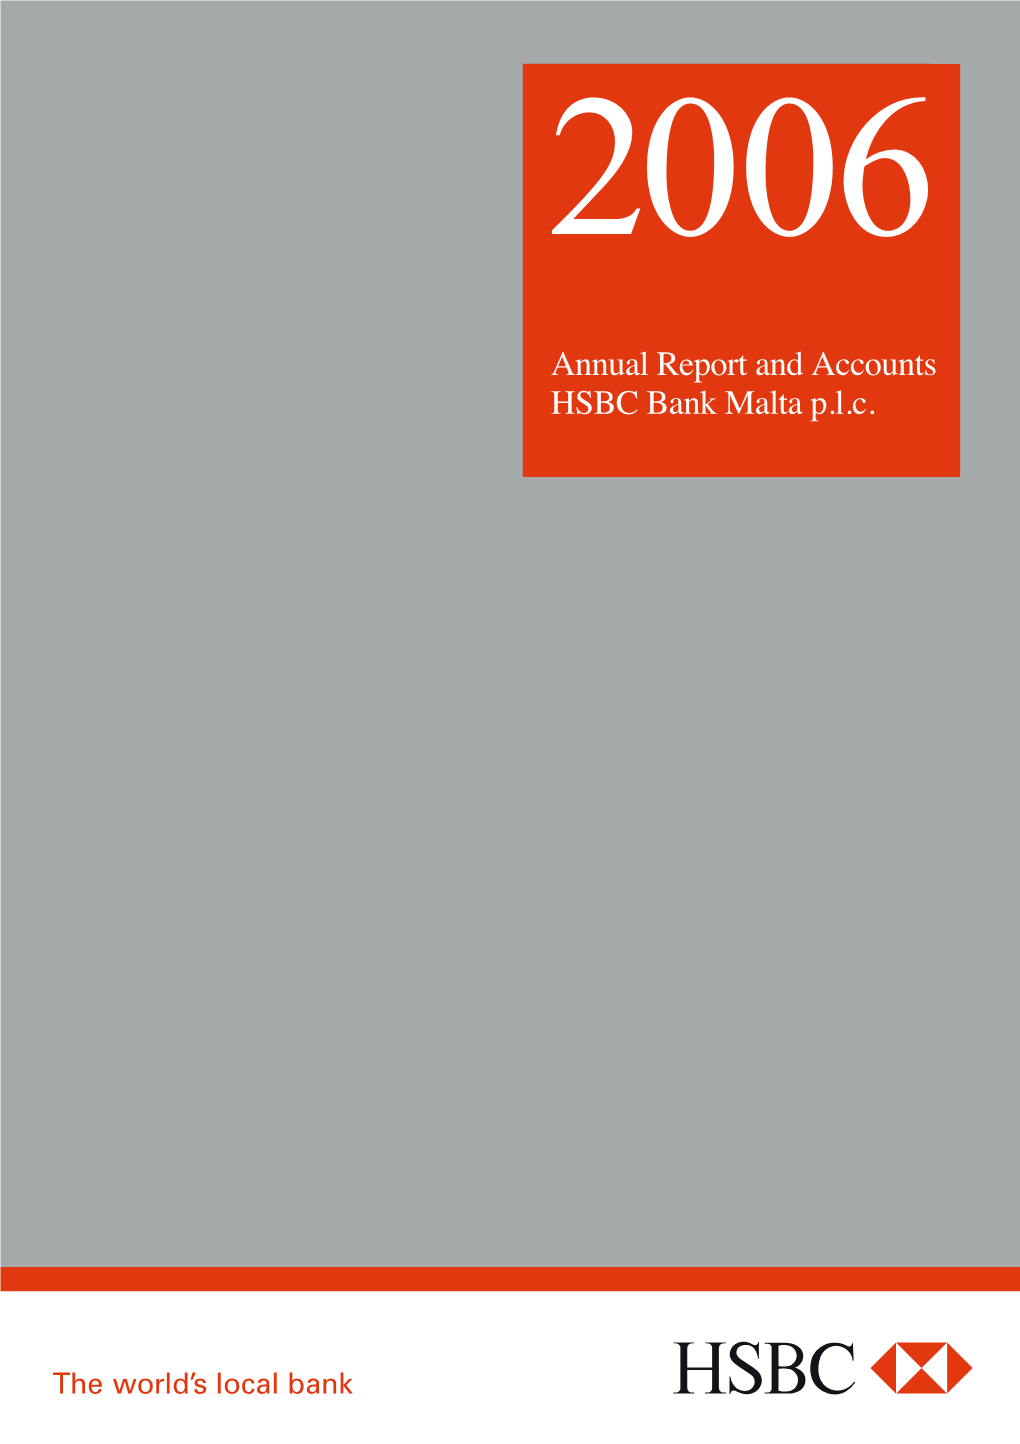 Annual Report and Accounts HSBC Bank Malta P.L.C. Annual Report and Accounts 2006